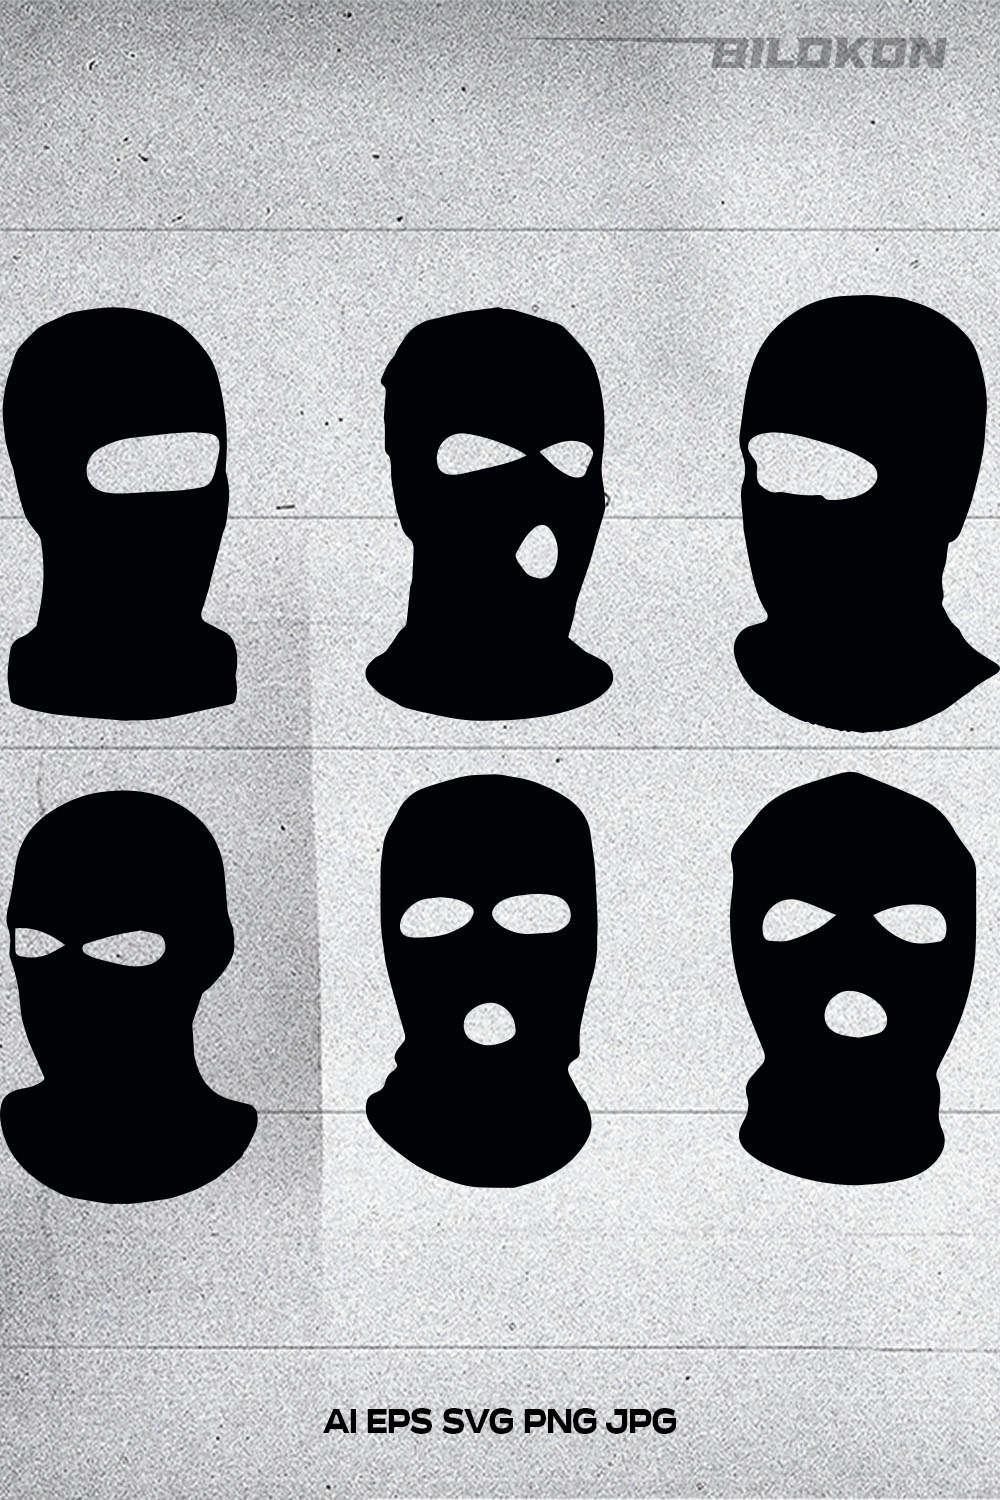 Balaclava masks of criminals, bandits and mafia, SVG Vector pinterest preview image.